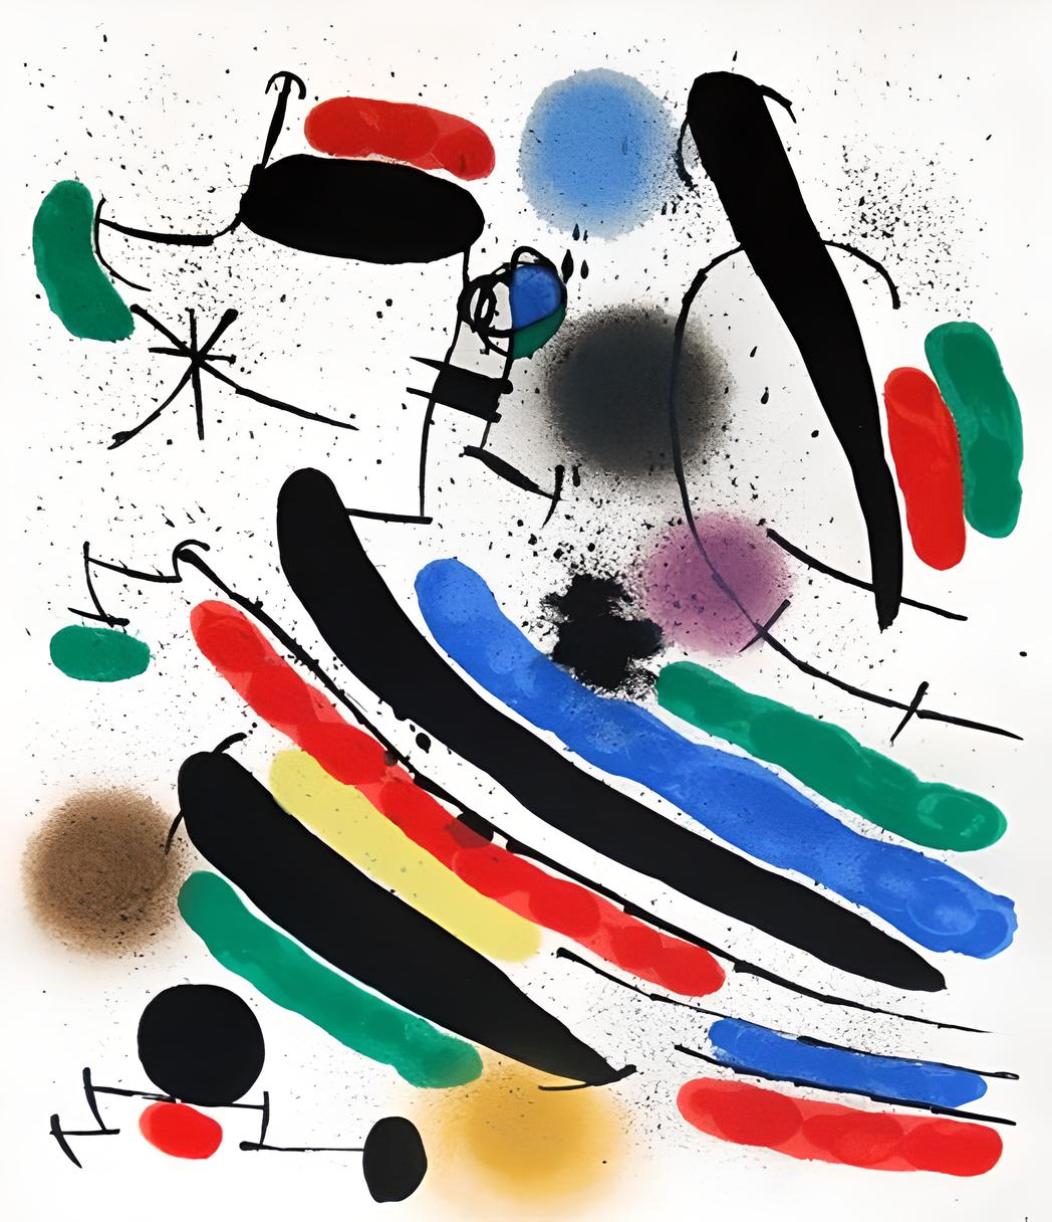 Joan Miró Abstract Print - Miro, Composition (Cramer 160; Mourlot 856), 1972 (after)